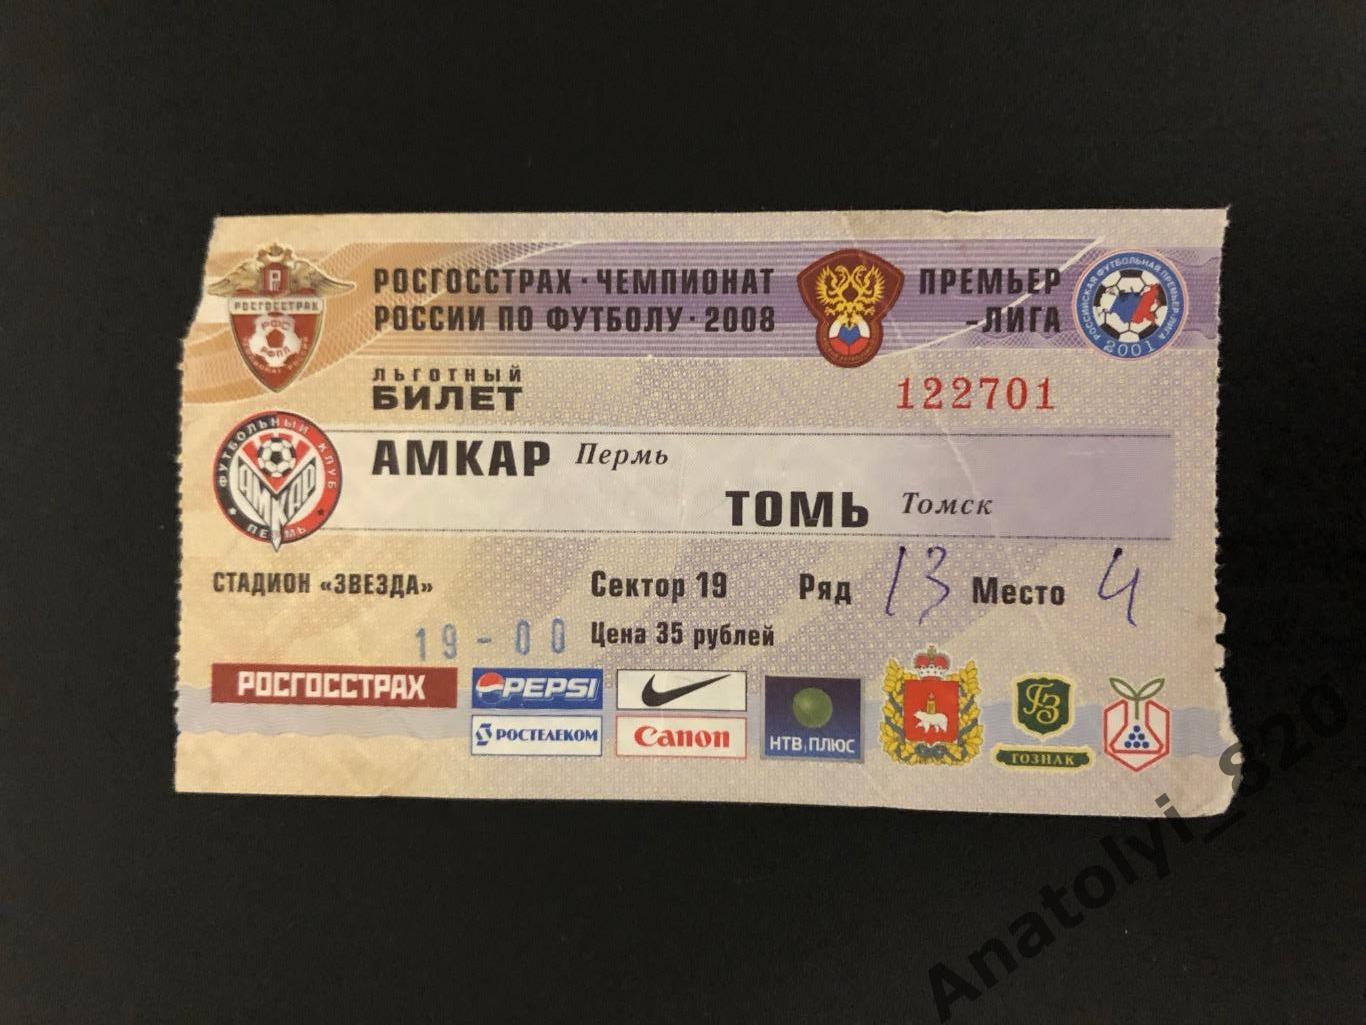 Амкар - Томь Томск, 26.07.2008, билет